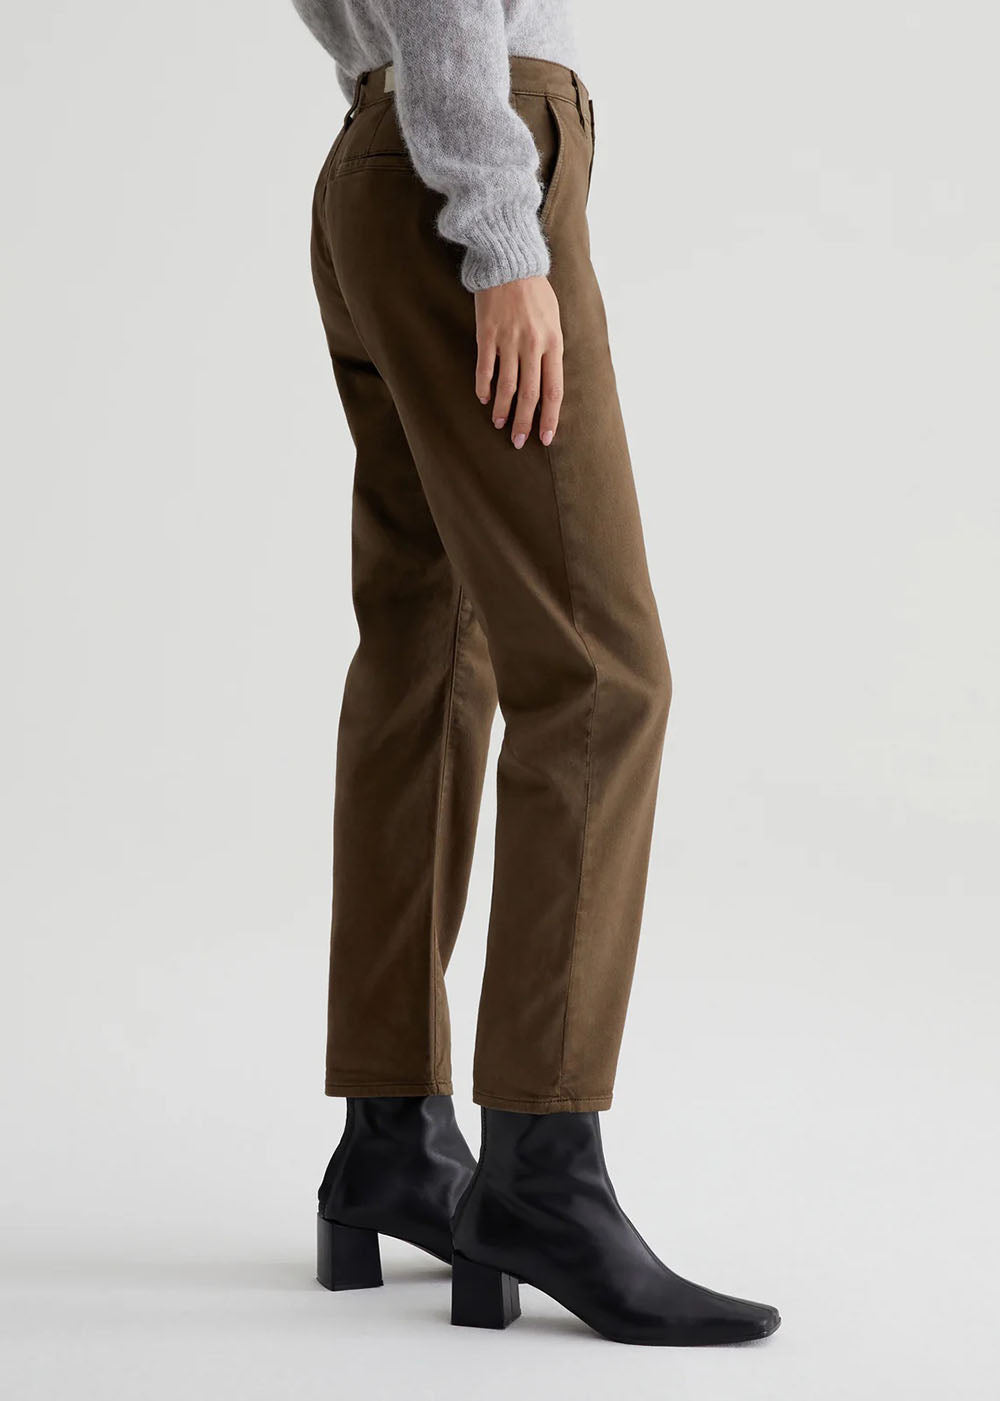 Caden Tailored Trouser - Sulfur Oak Brown - AG Jeans Canada - Danali - SBW1613SLOABR